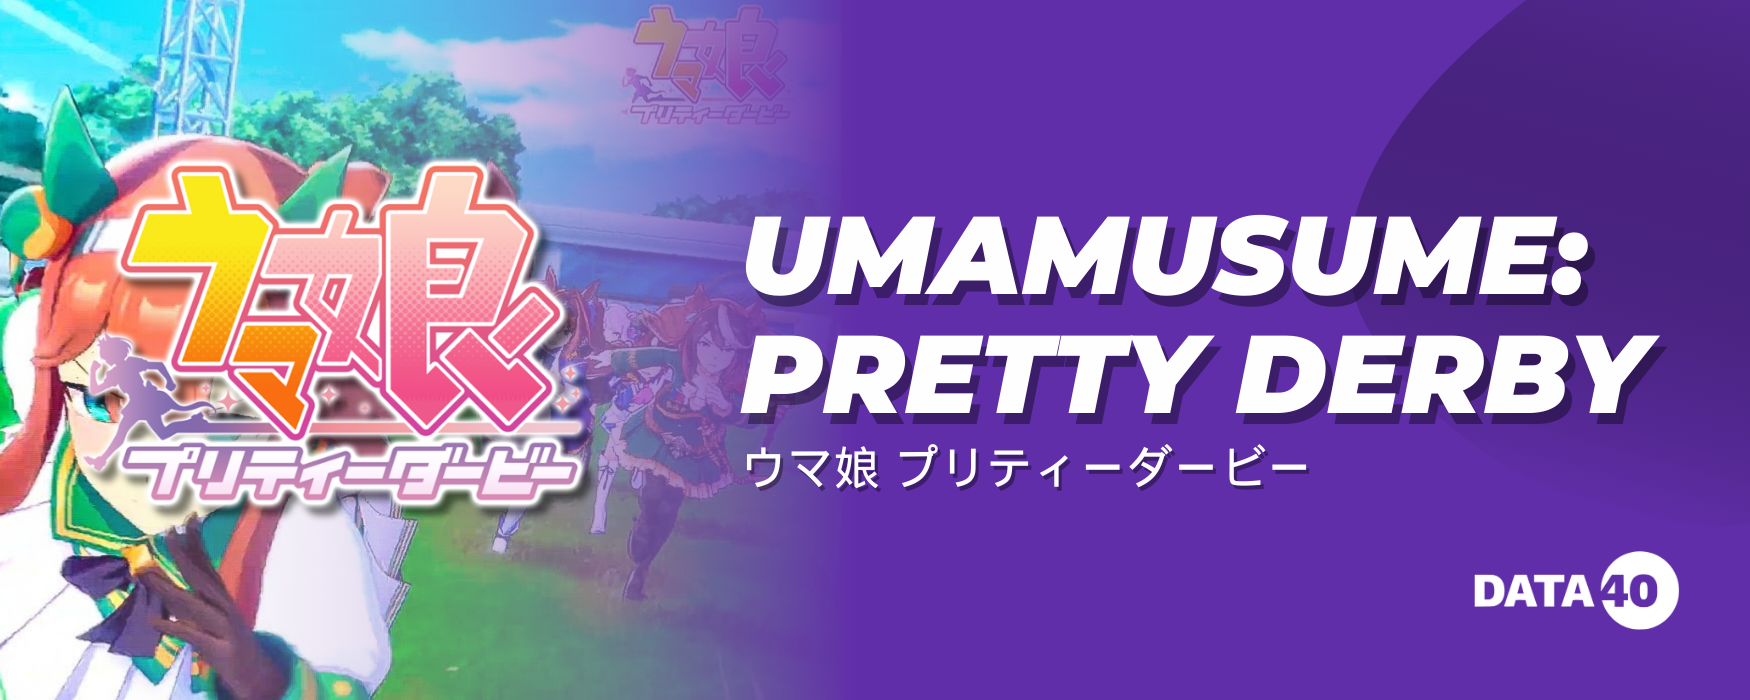 Umamusume_ Pretty Derby